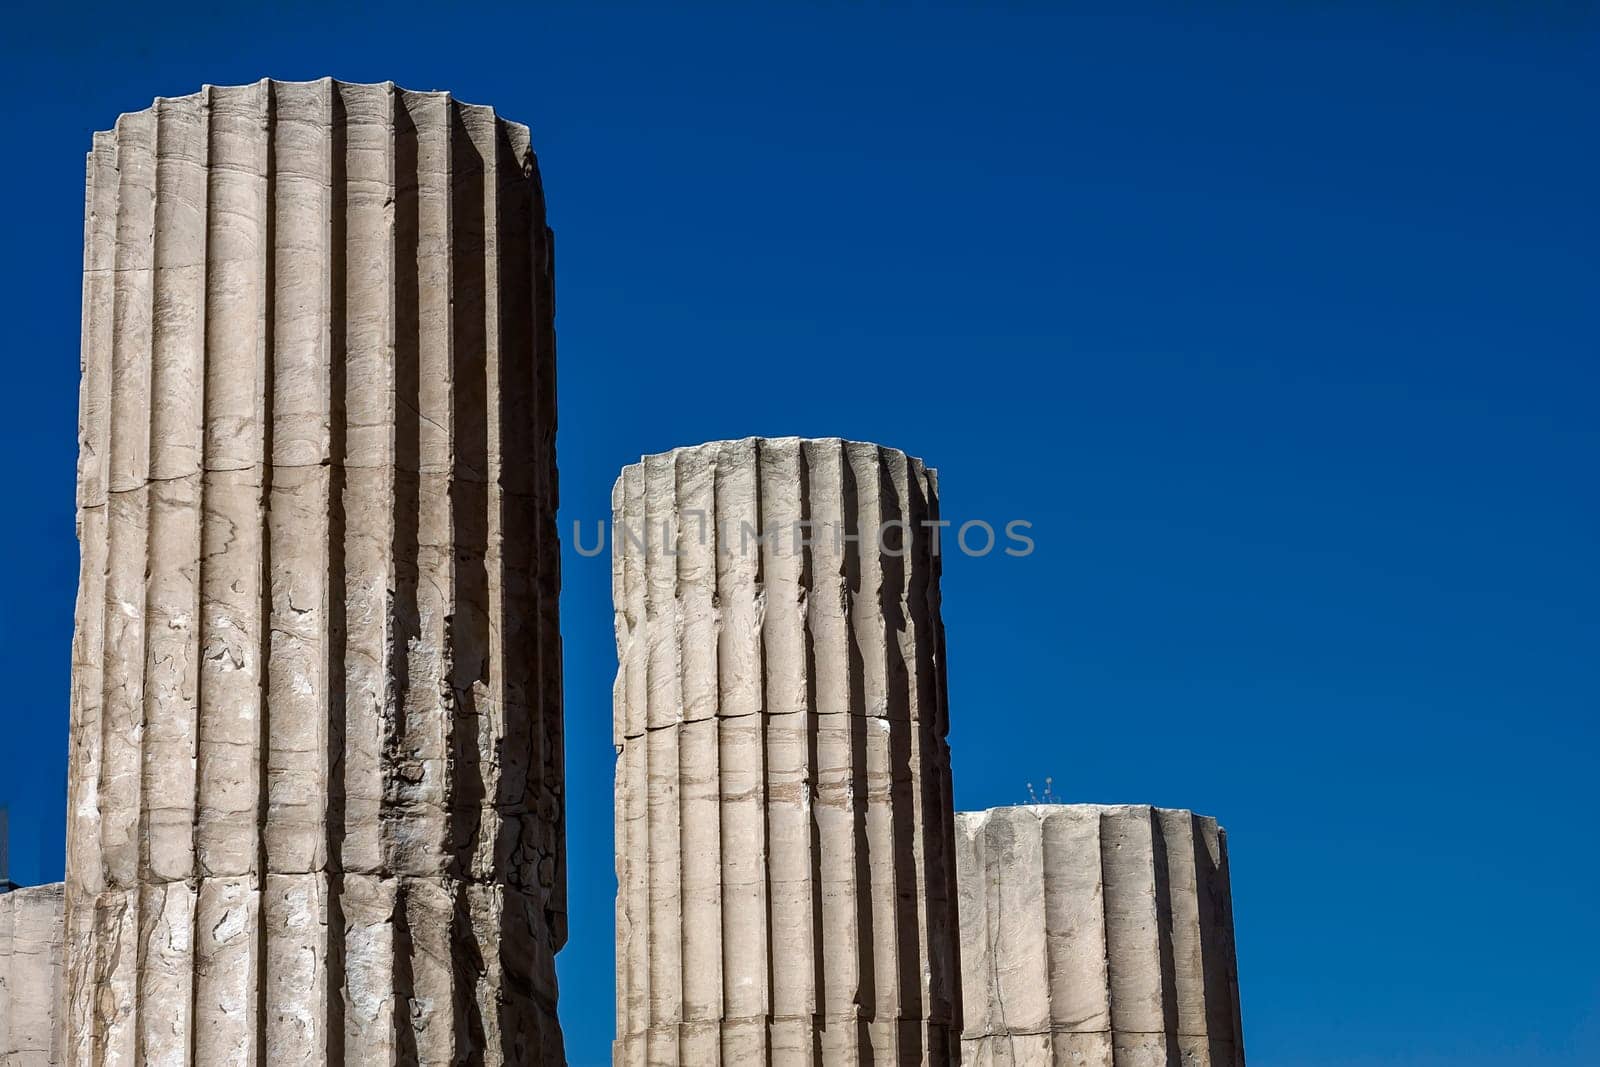 ATHENS, GREECE - 06/23/2013 - particular the columns of the Acropolis